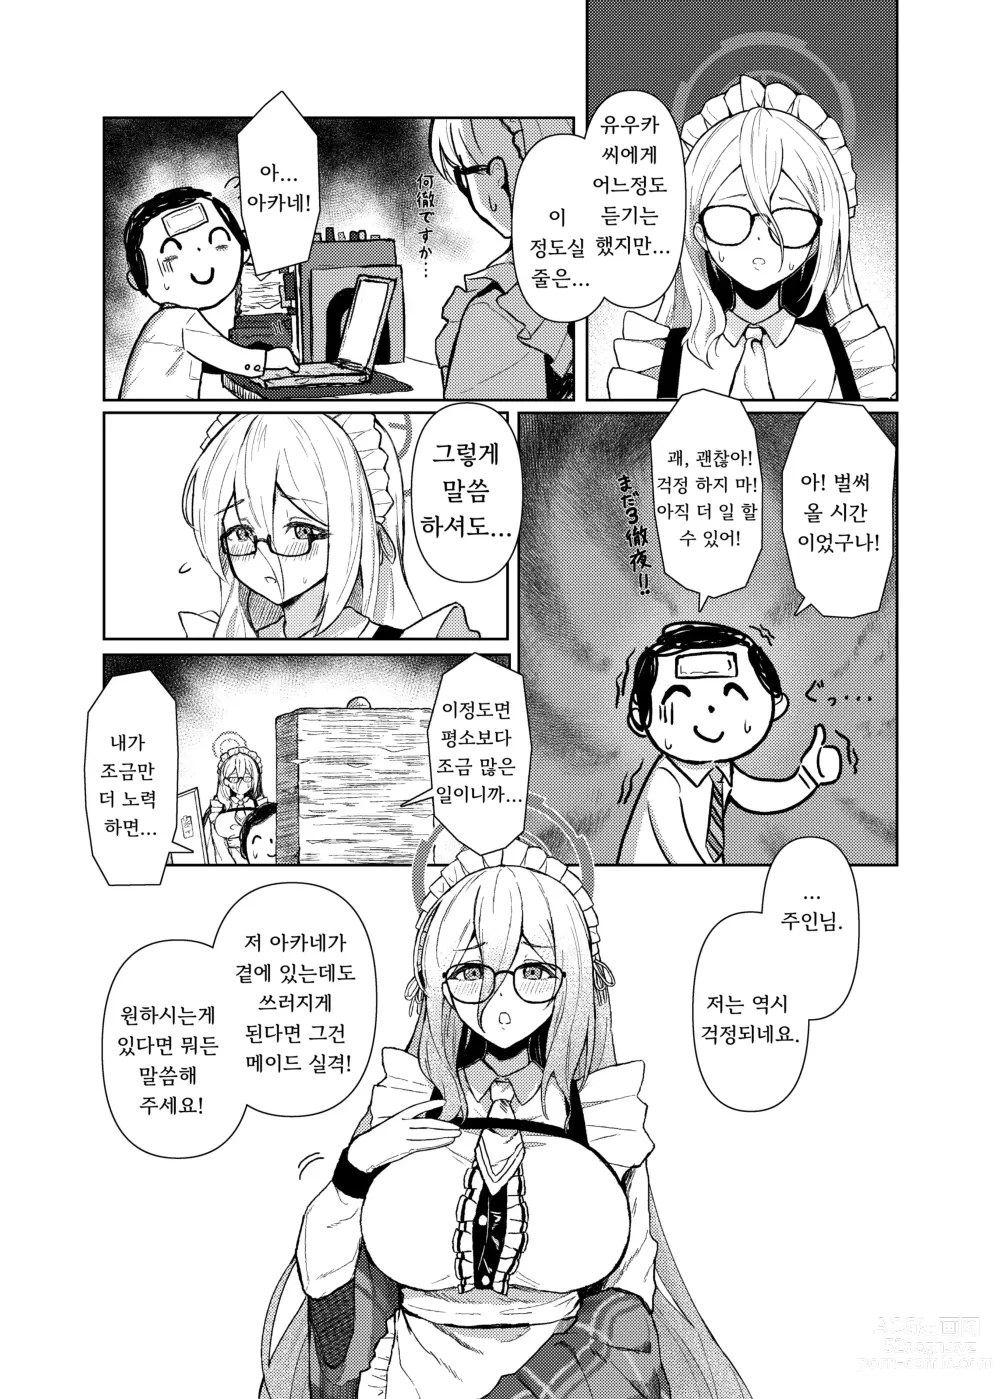 Page 4 of doujinshi 아카네한테 치유받지 않으실래요?